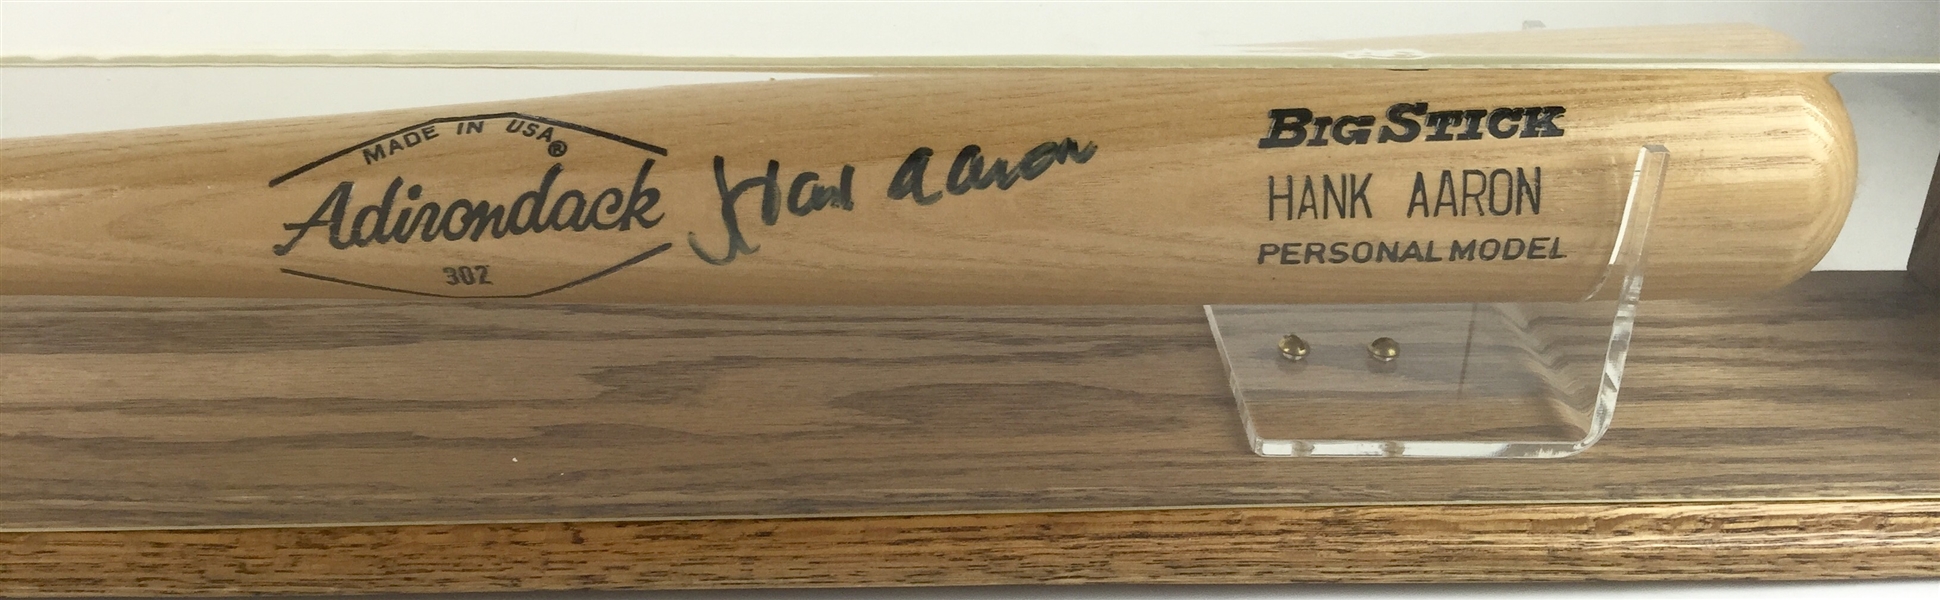 Hank Aaron Signed Adirondack Big Stick Model Bat (PSA/JSA Guaranteed)